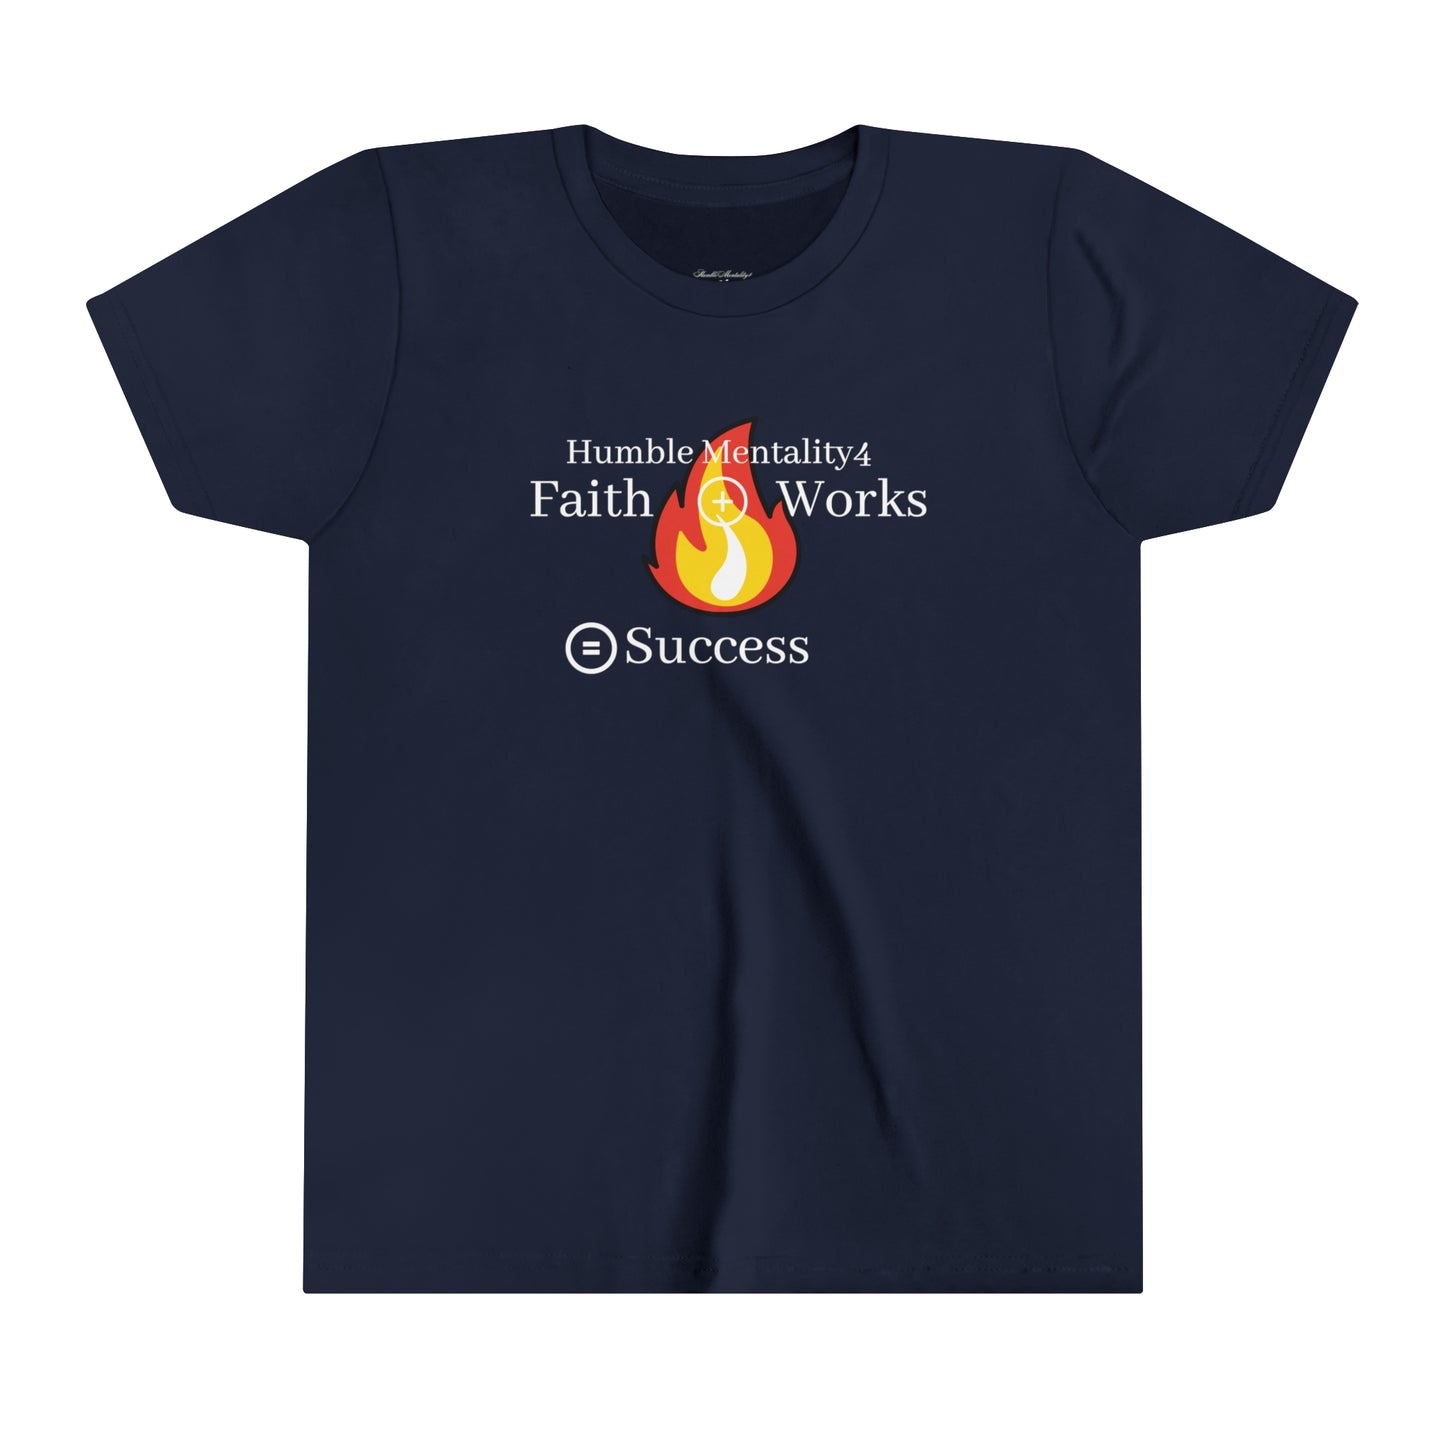 The Success T-Shirt